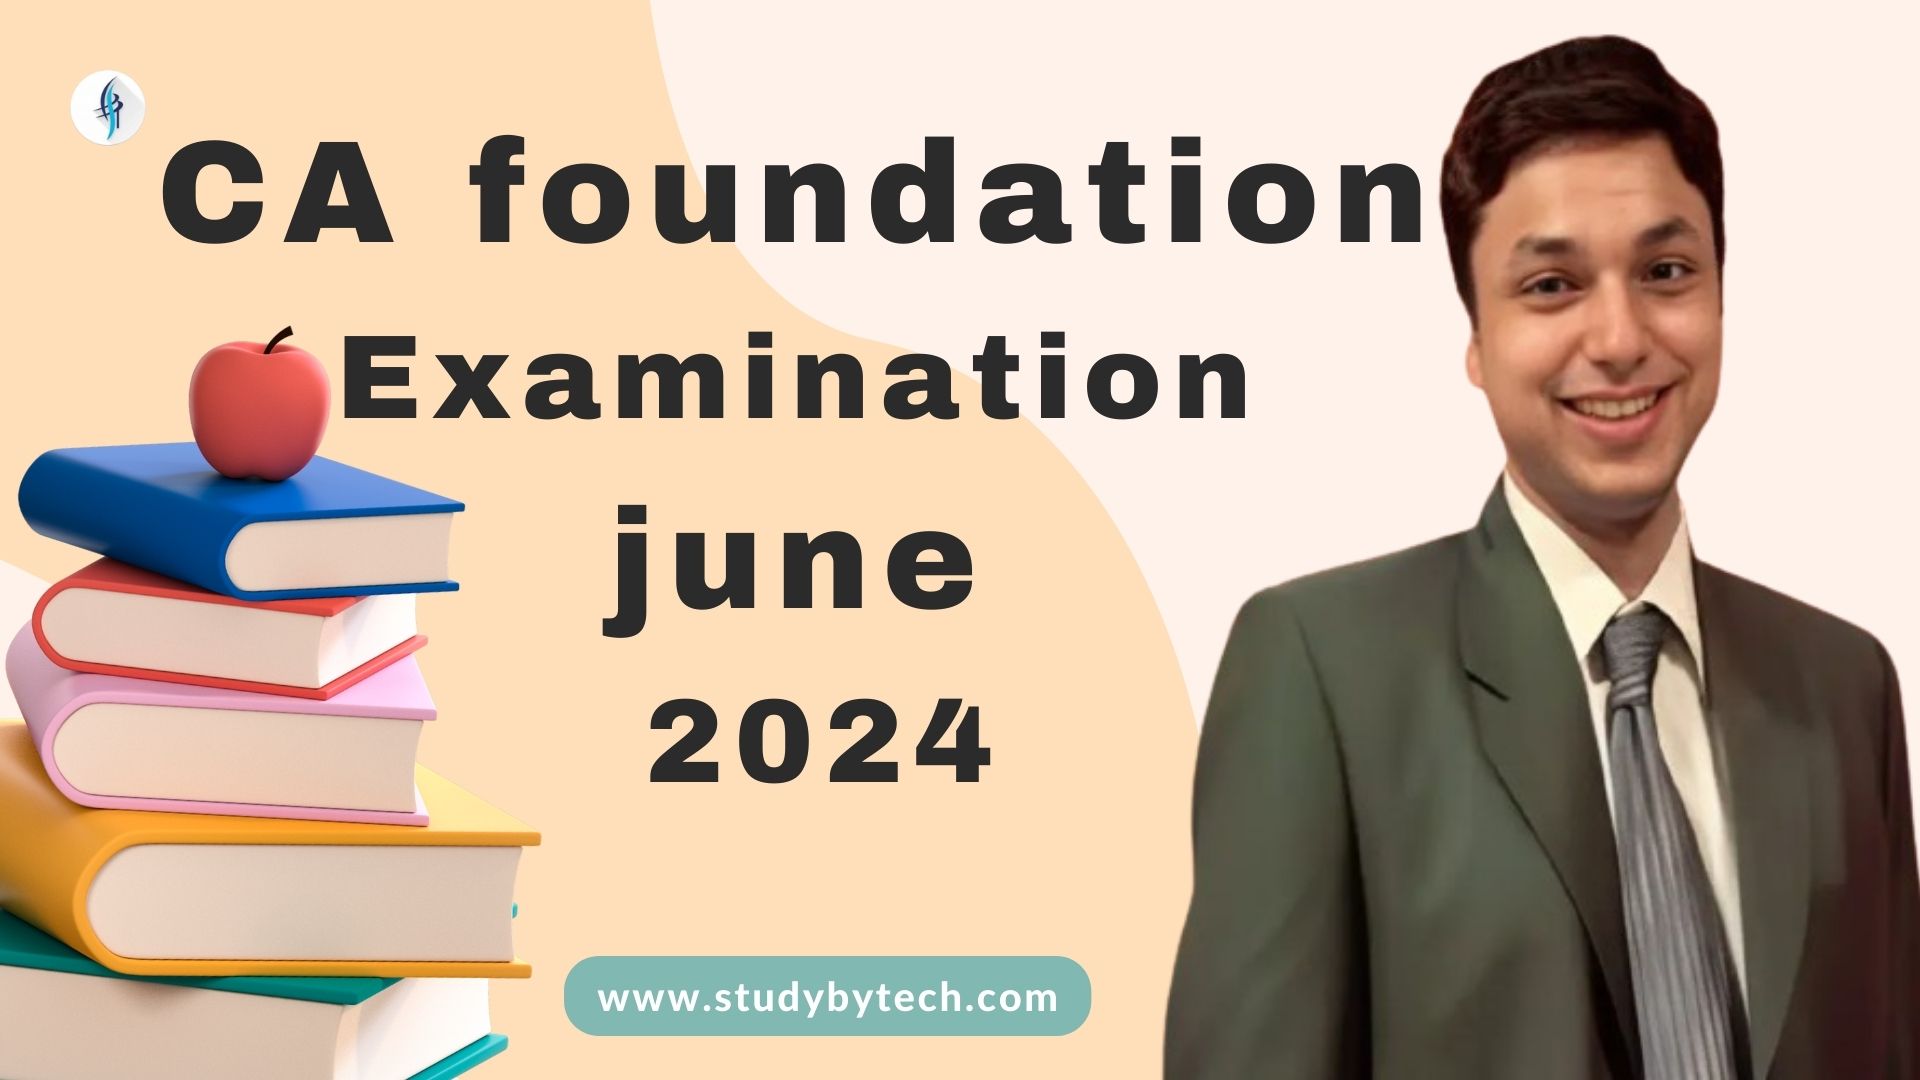 CA foundation examination june 2024